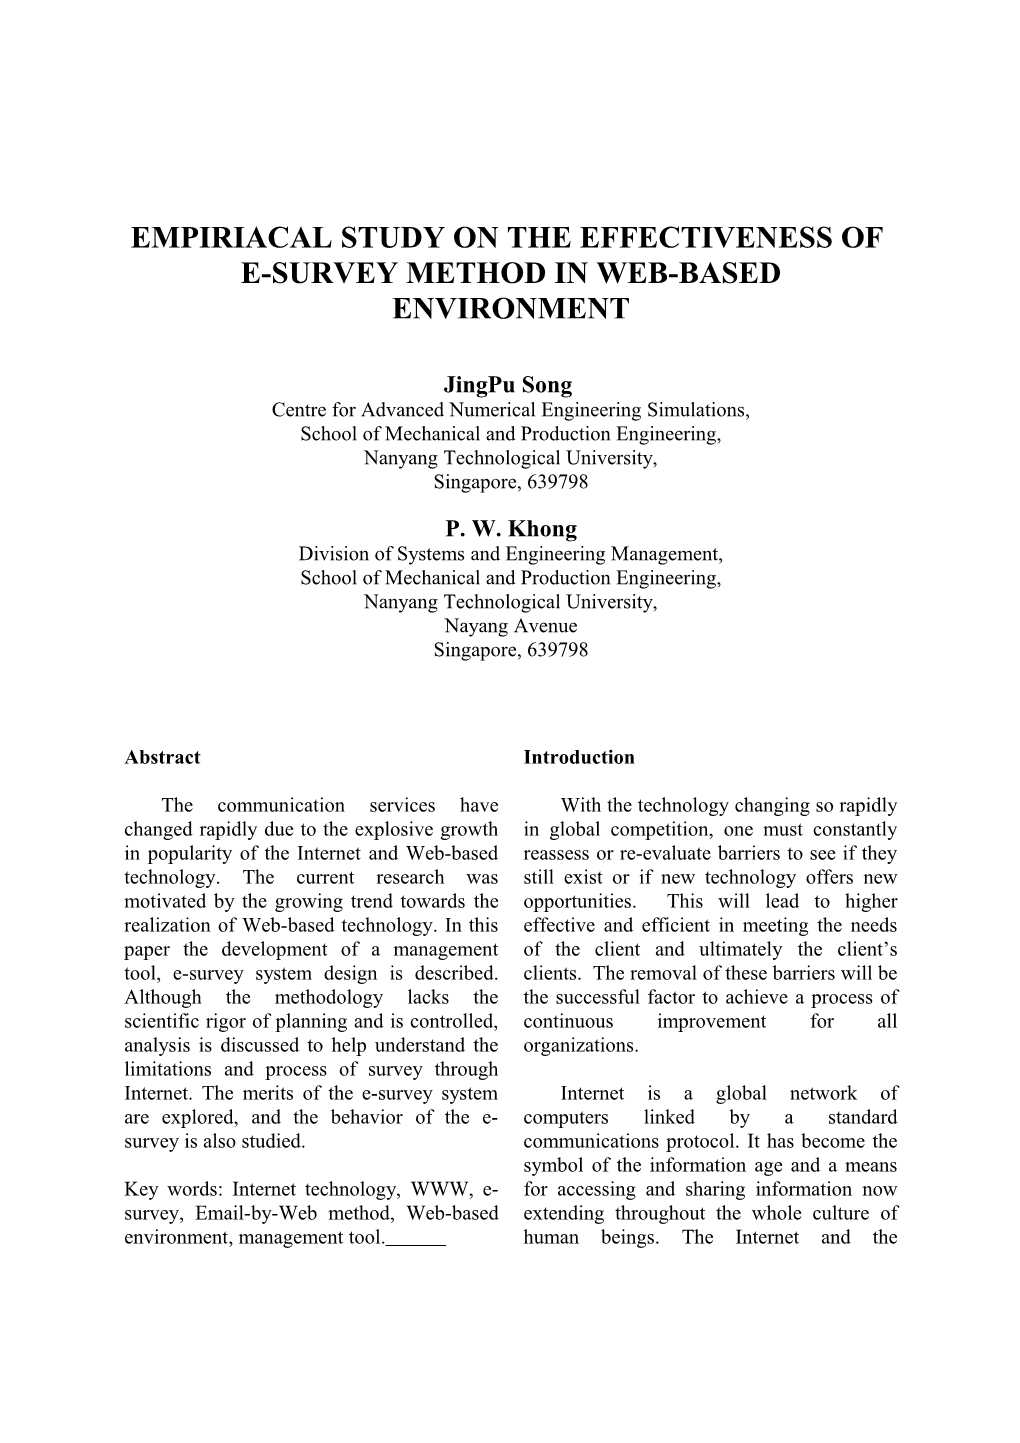 Empiriacal Study on the Effectiveness of E-Survey Method in Web-Based Environment